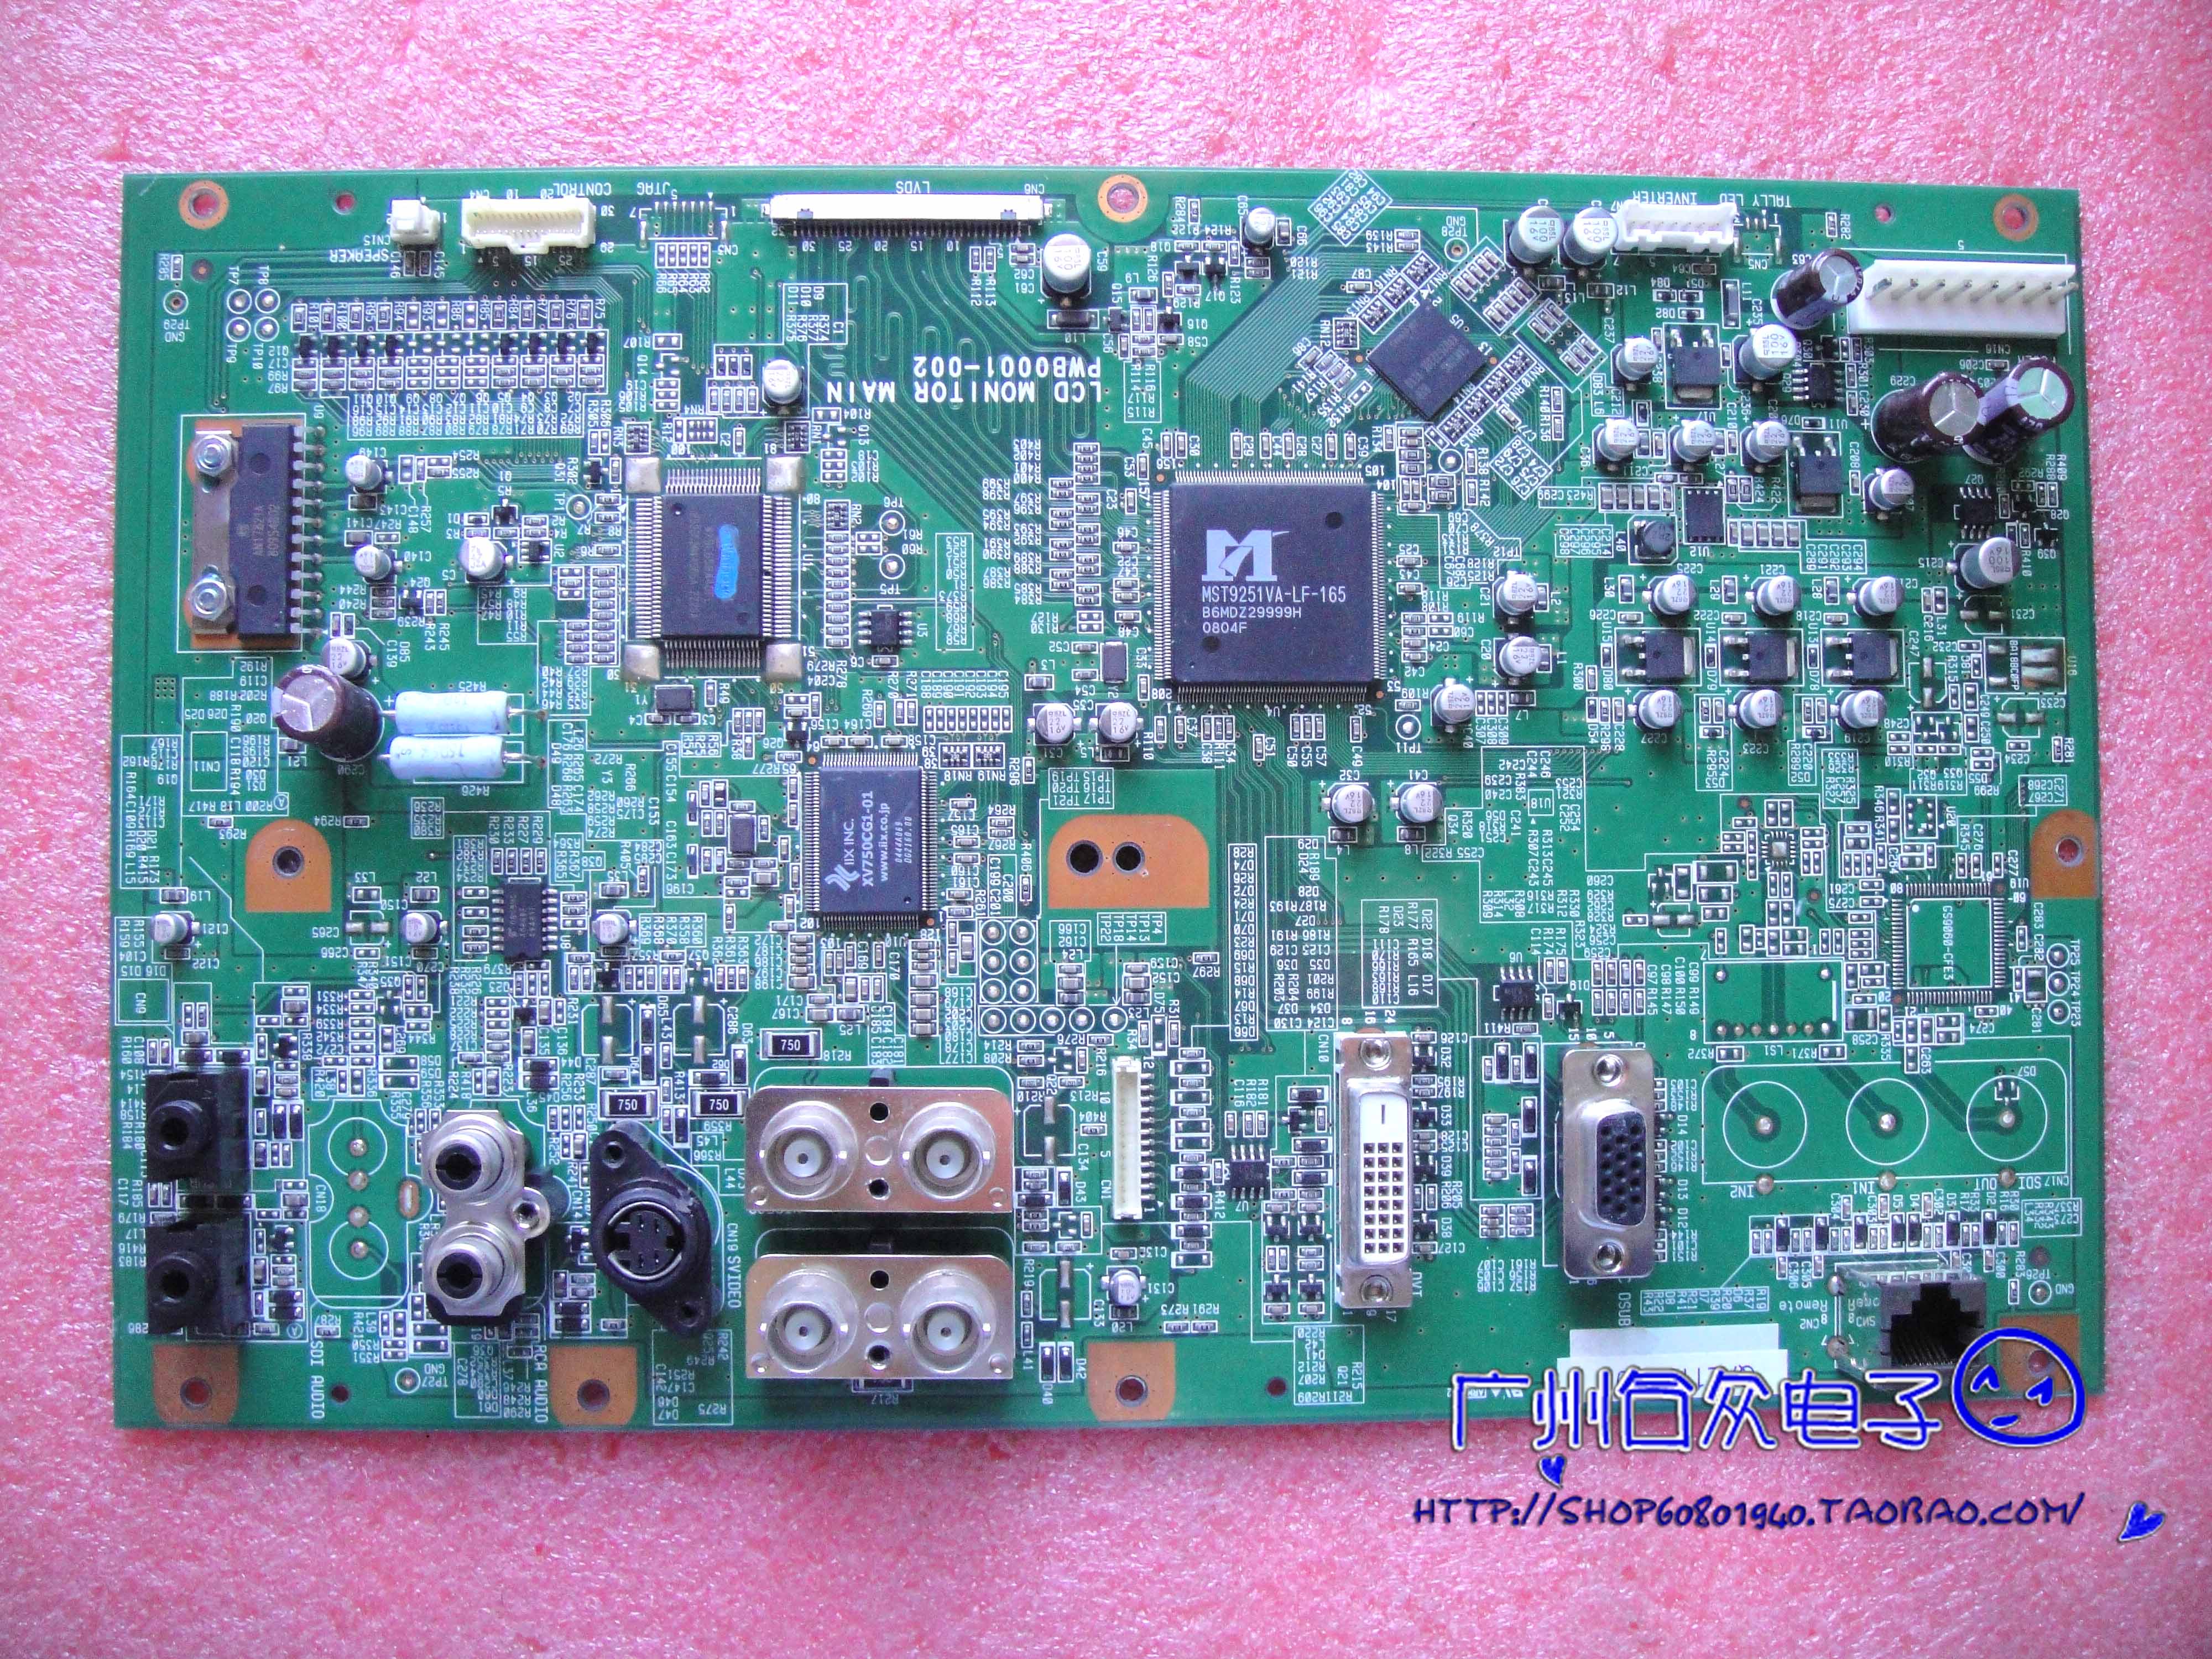 LCD MONITOR MAIN PWB0001-002 QAL1184-001主板驱动板-图1